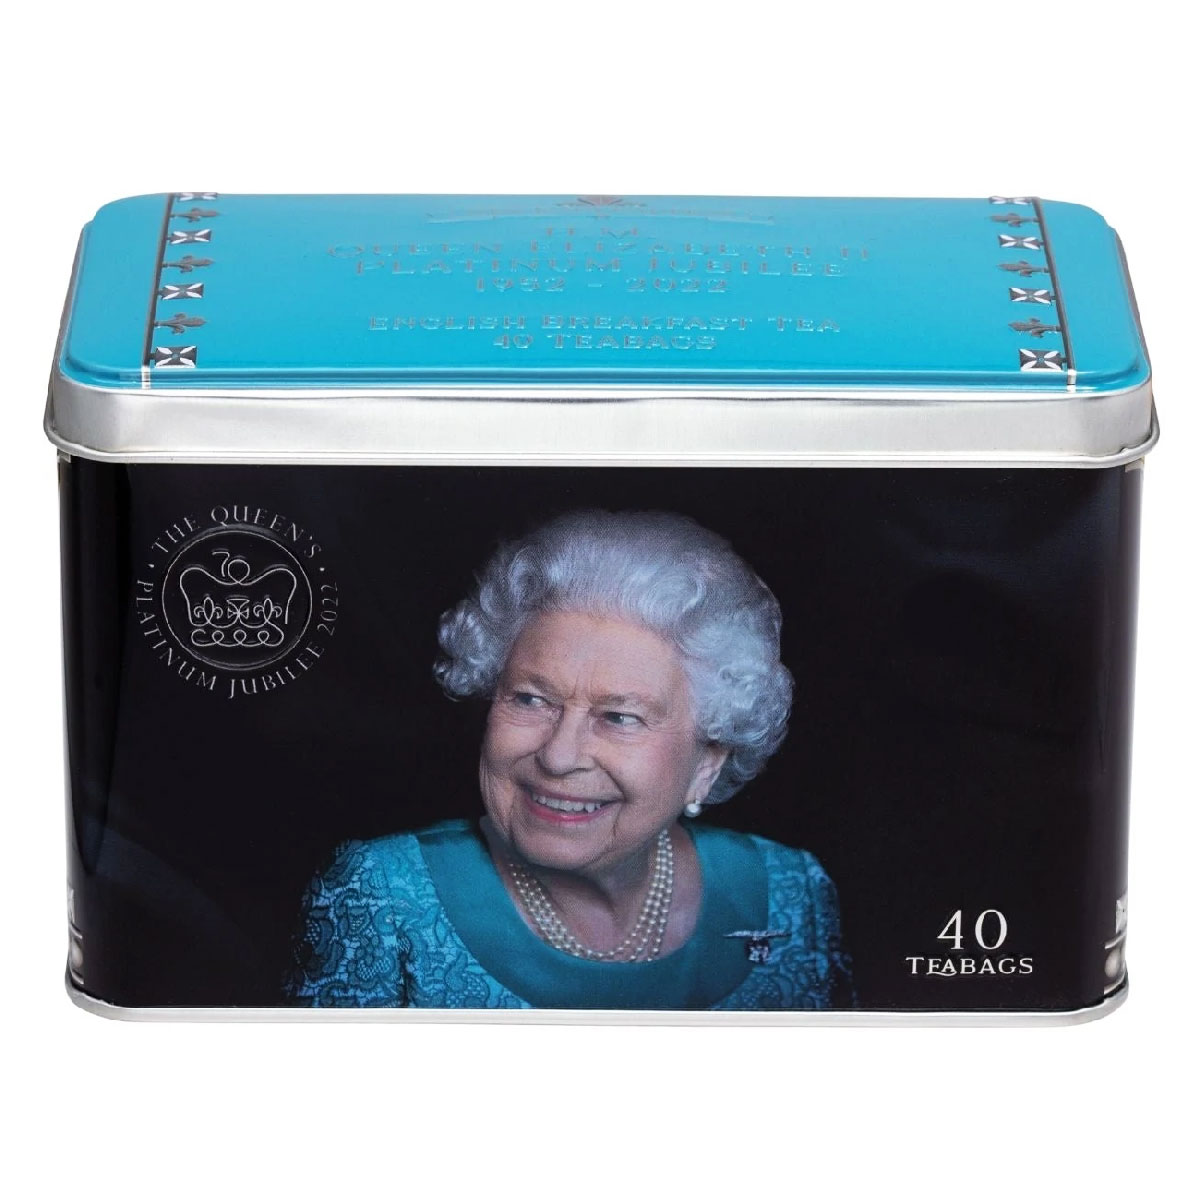 New English Teas Queen Elizabeth II Platinum Jubilee 2022 English Breakfast Tea Tin 40 Teabags